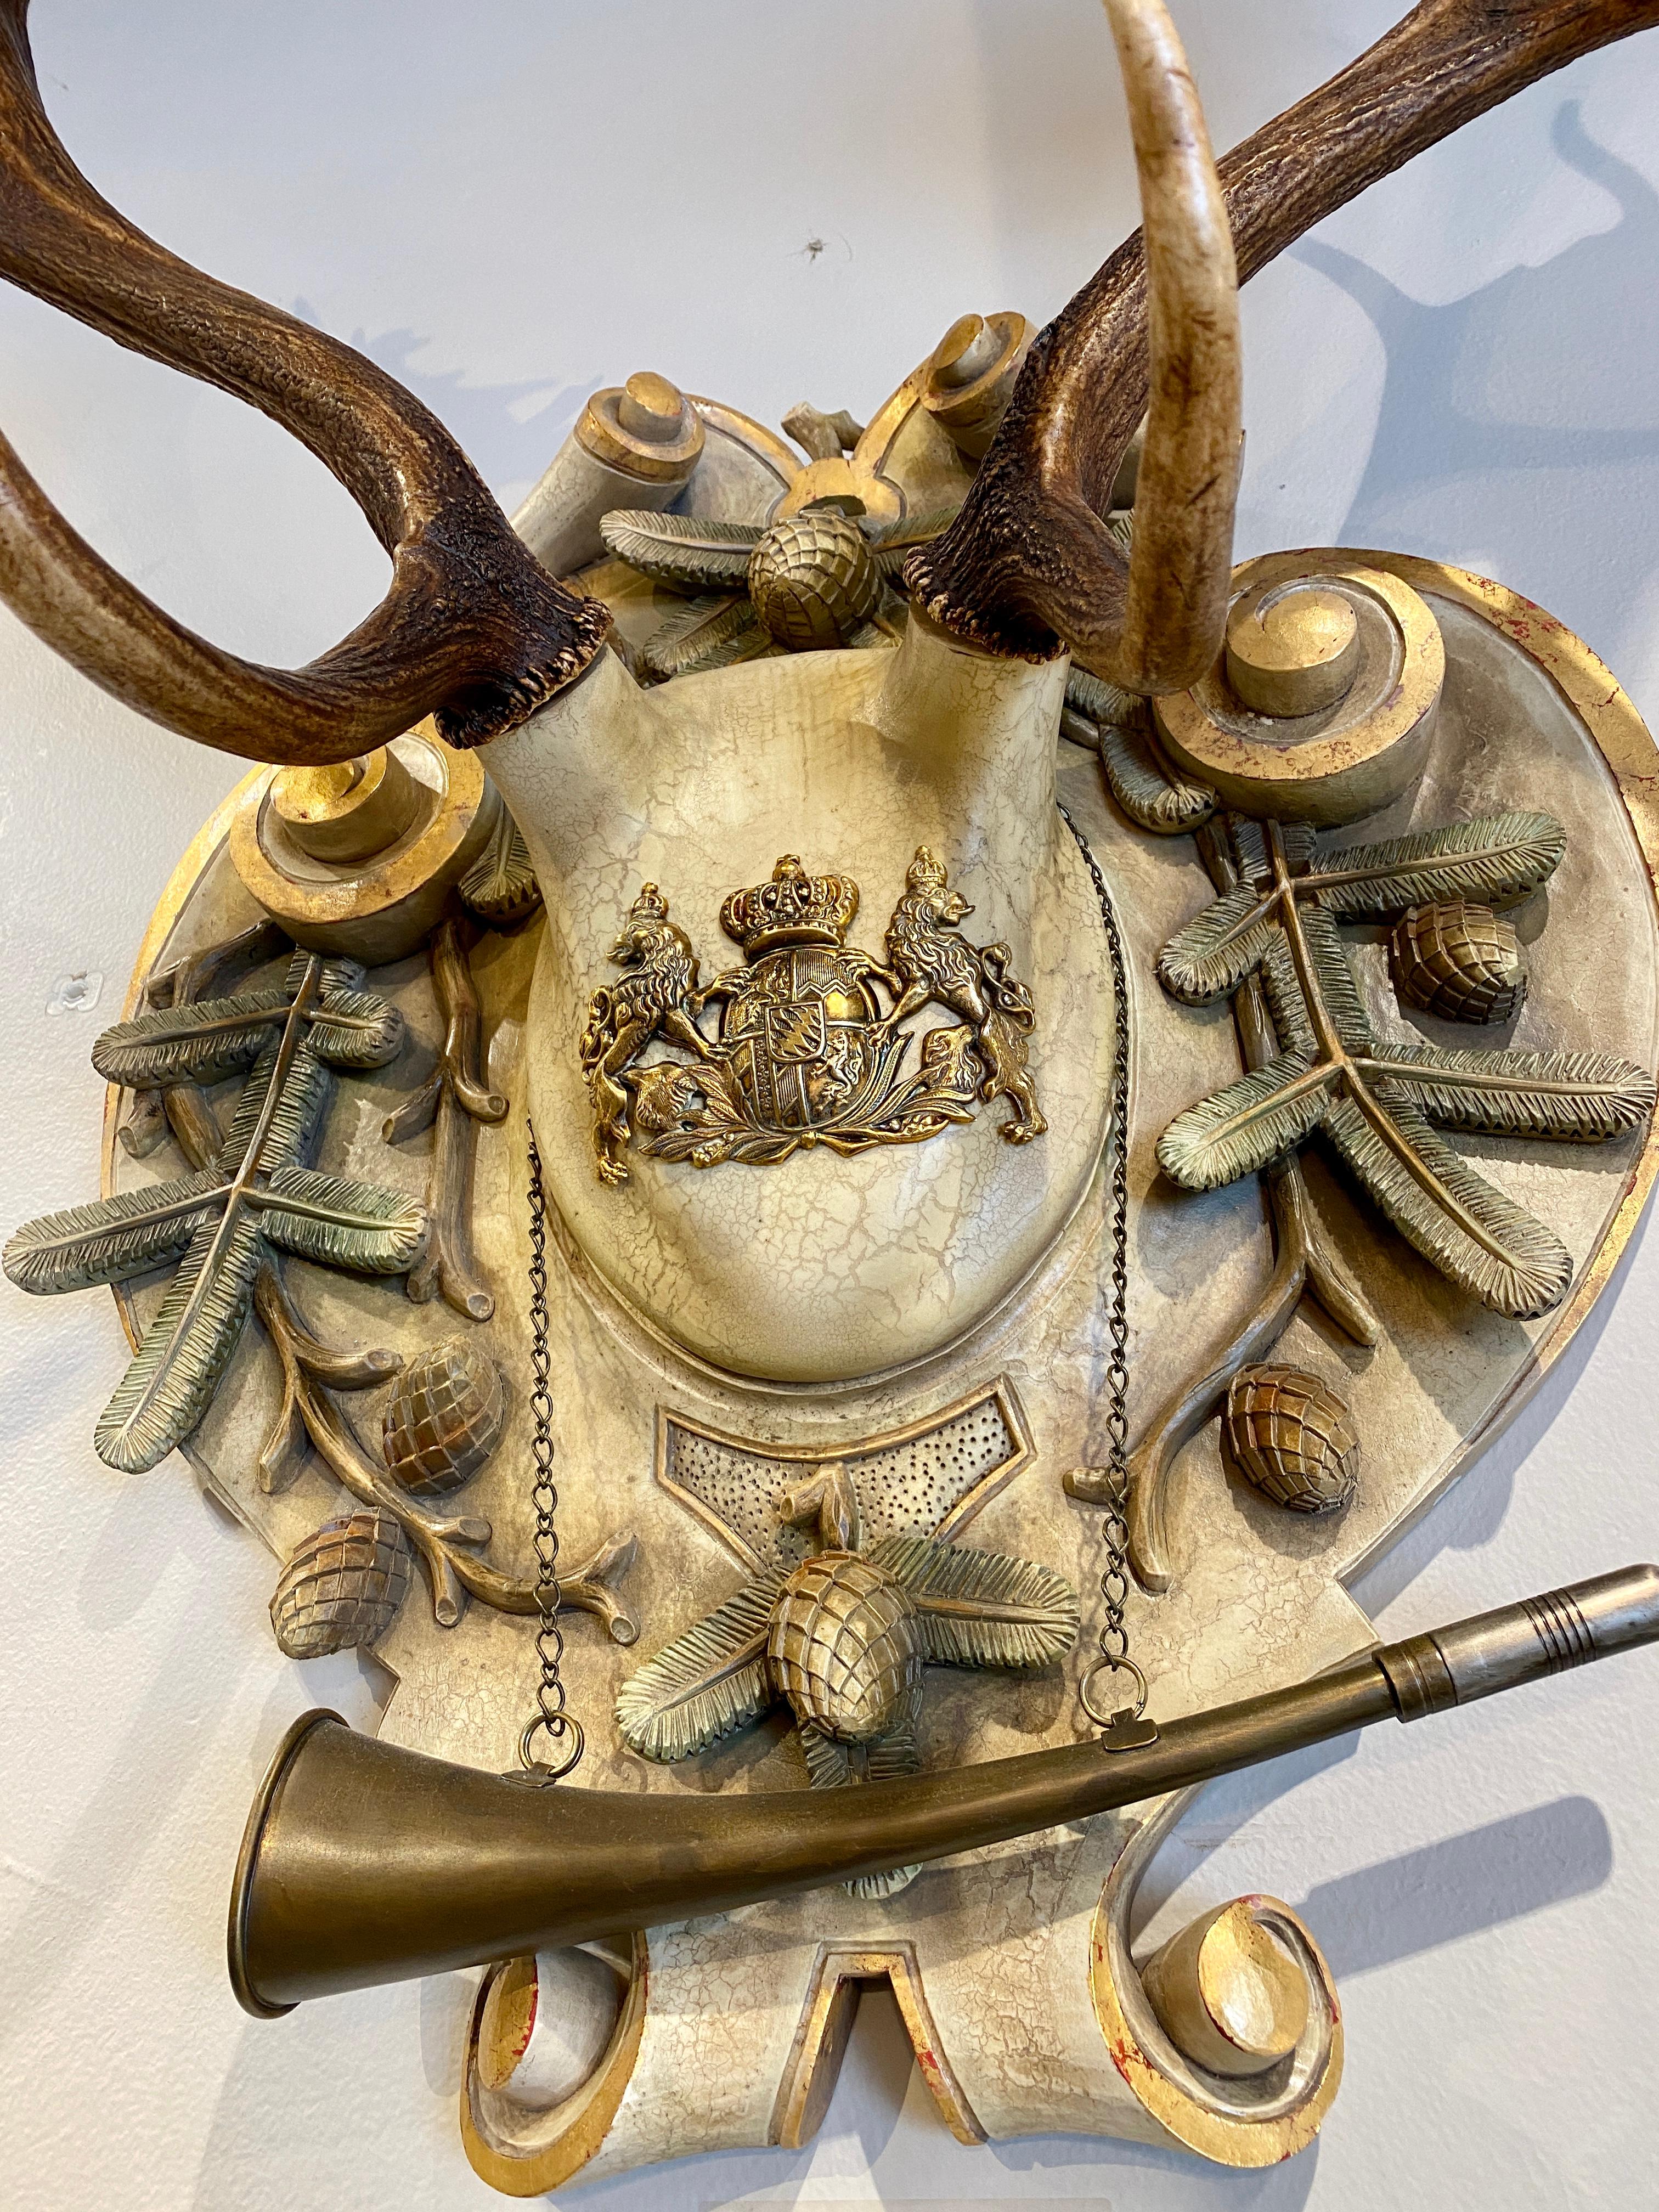 Austrian 19th Century Habsburg Fallow Trophy on Italian Polychrome Plaque with Hunt Horn